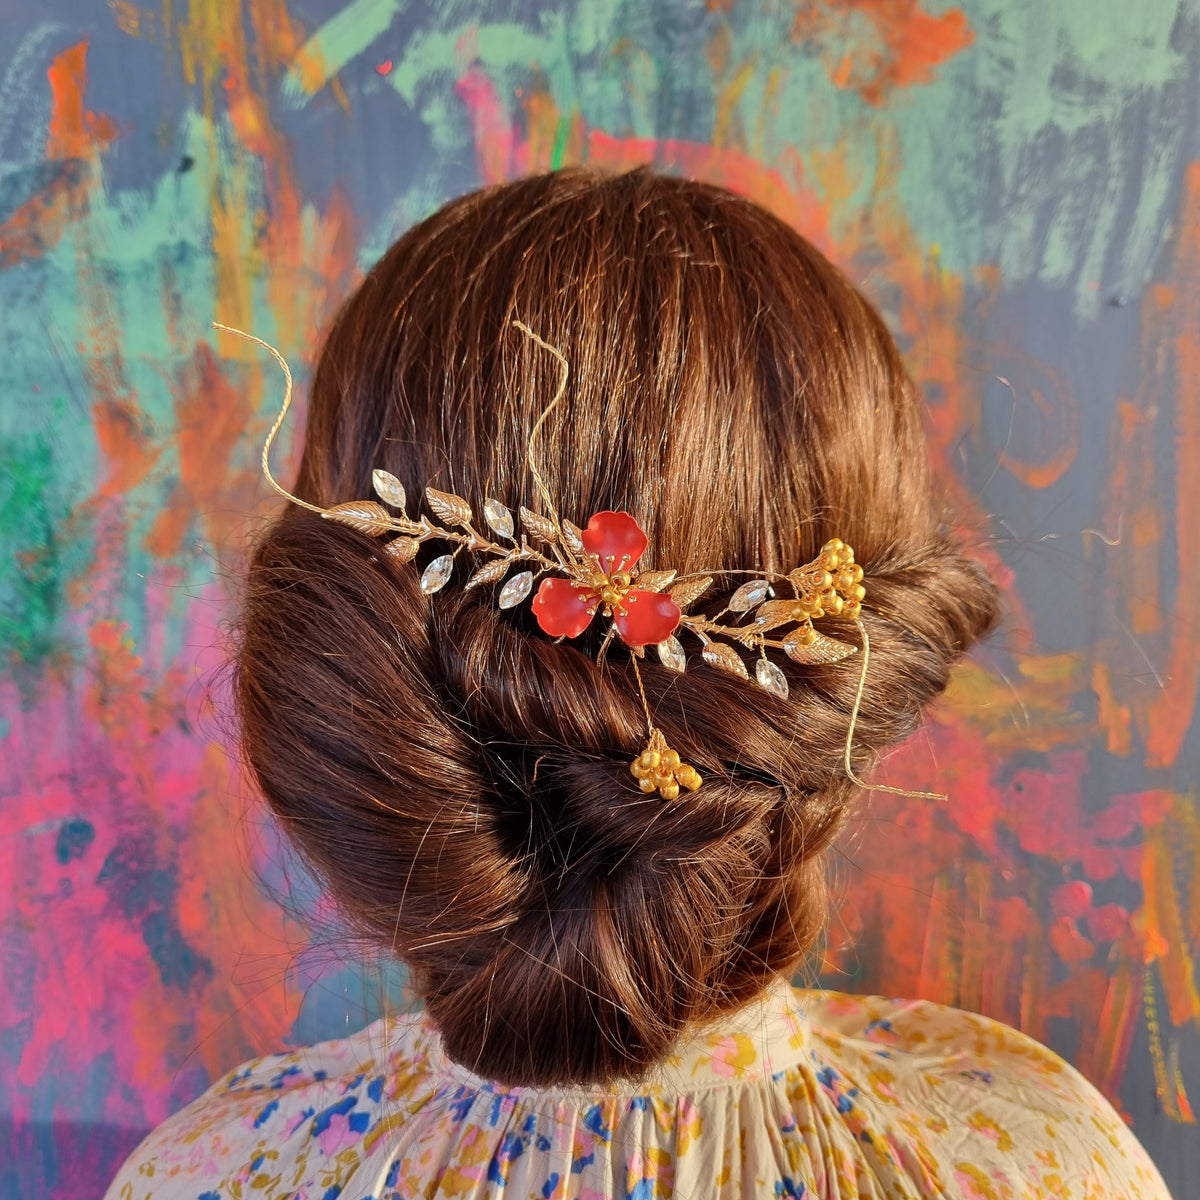 Stor hårnål med rød blomst i emalje - Hårpynt med blomster og perler til bryllup, konfirmation og fest